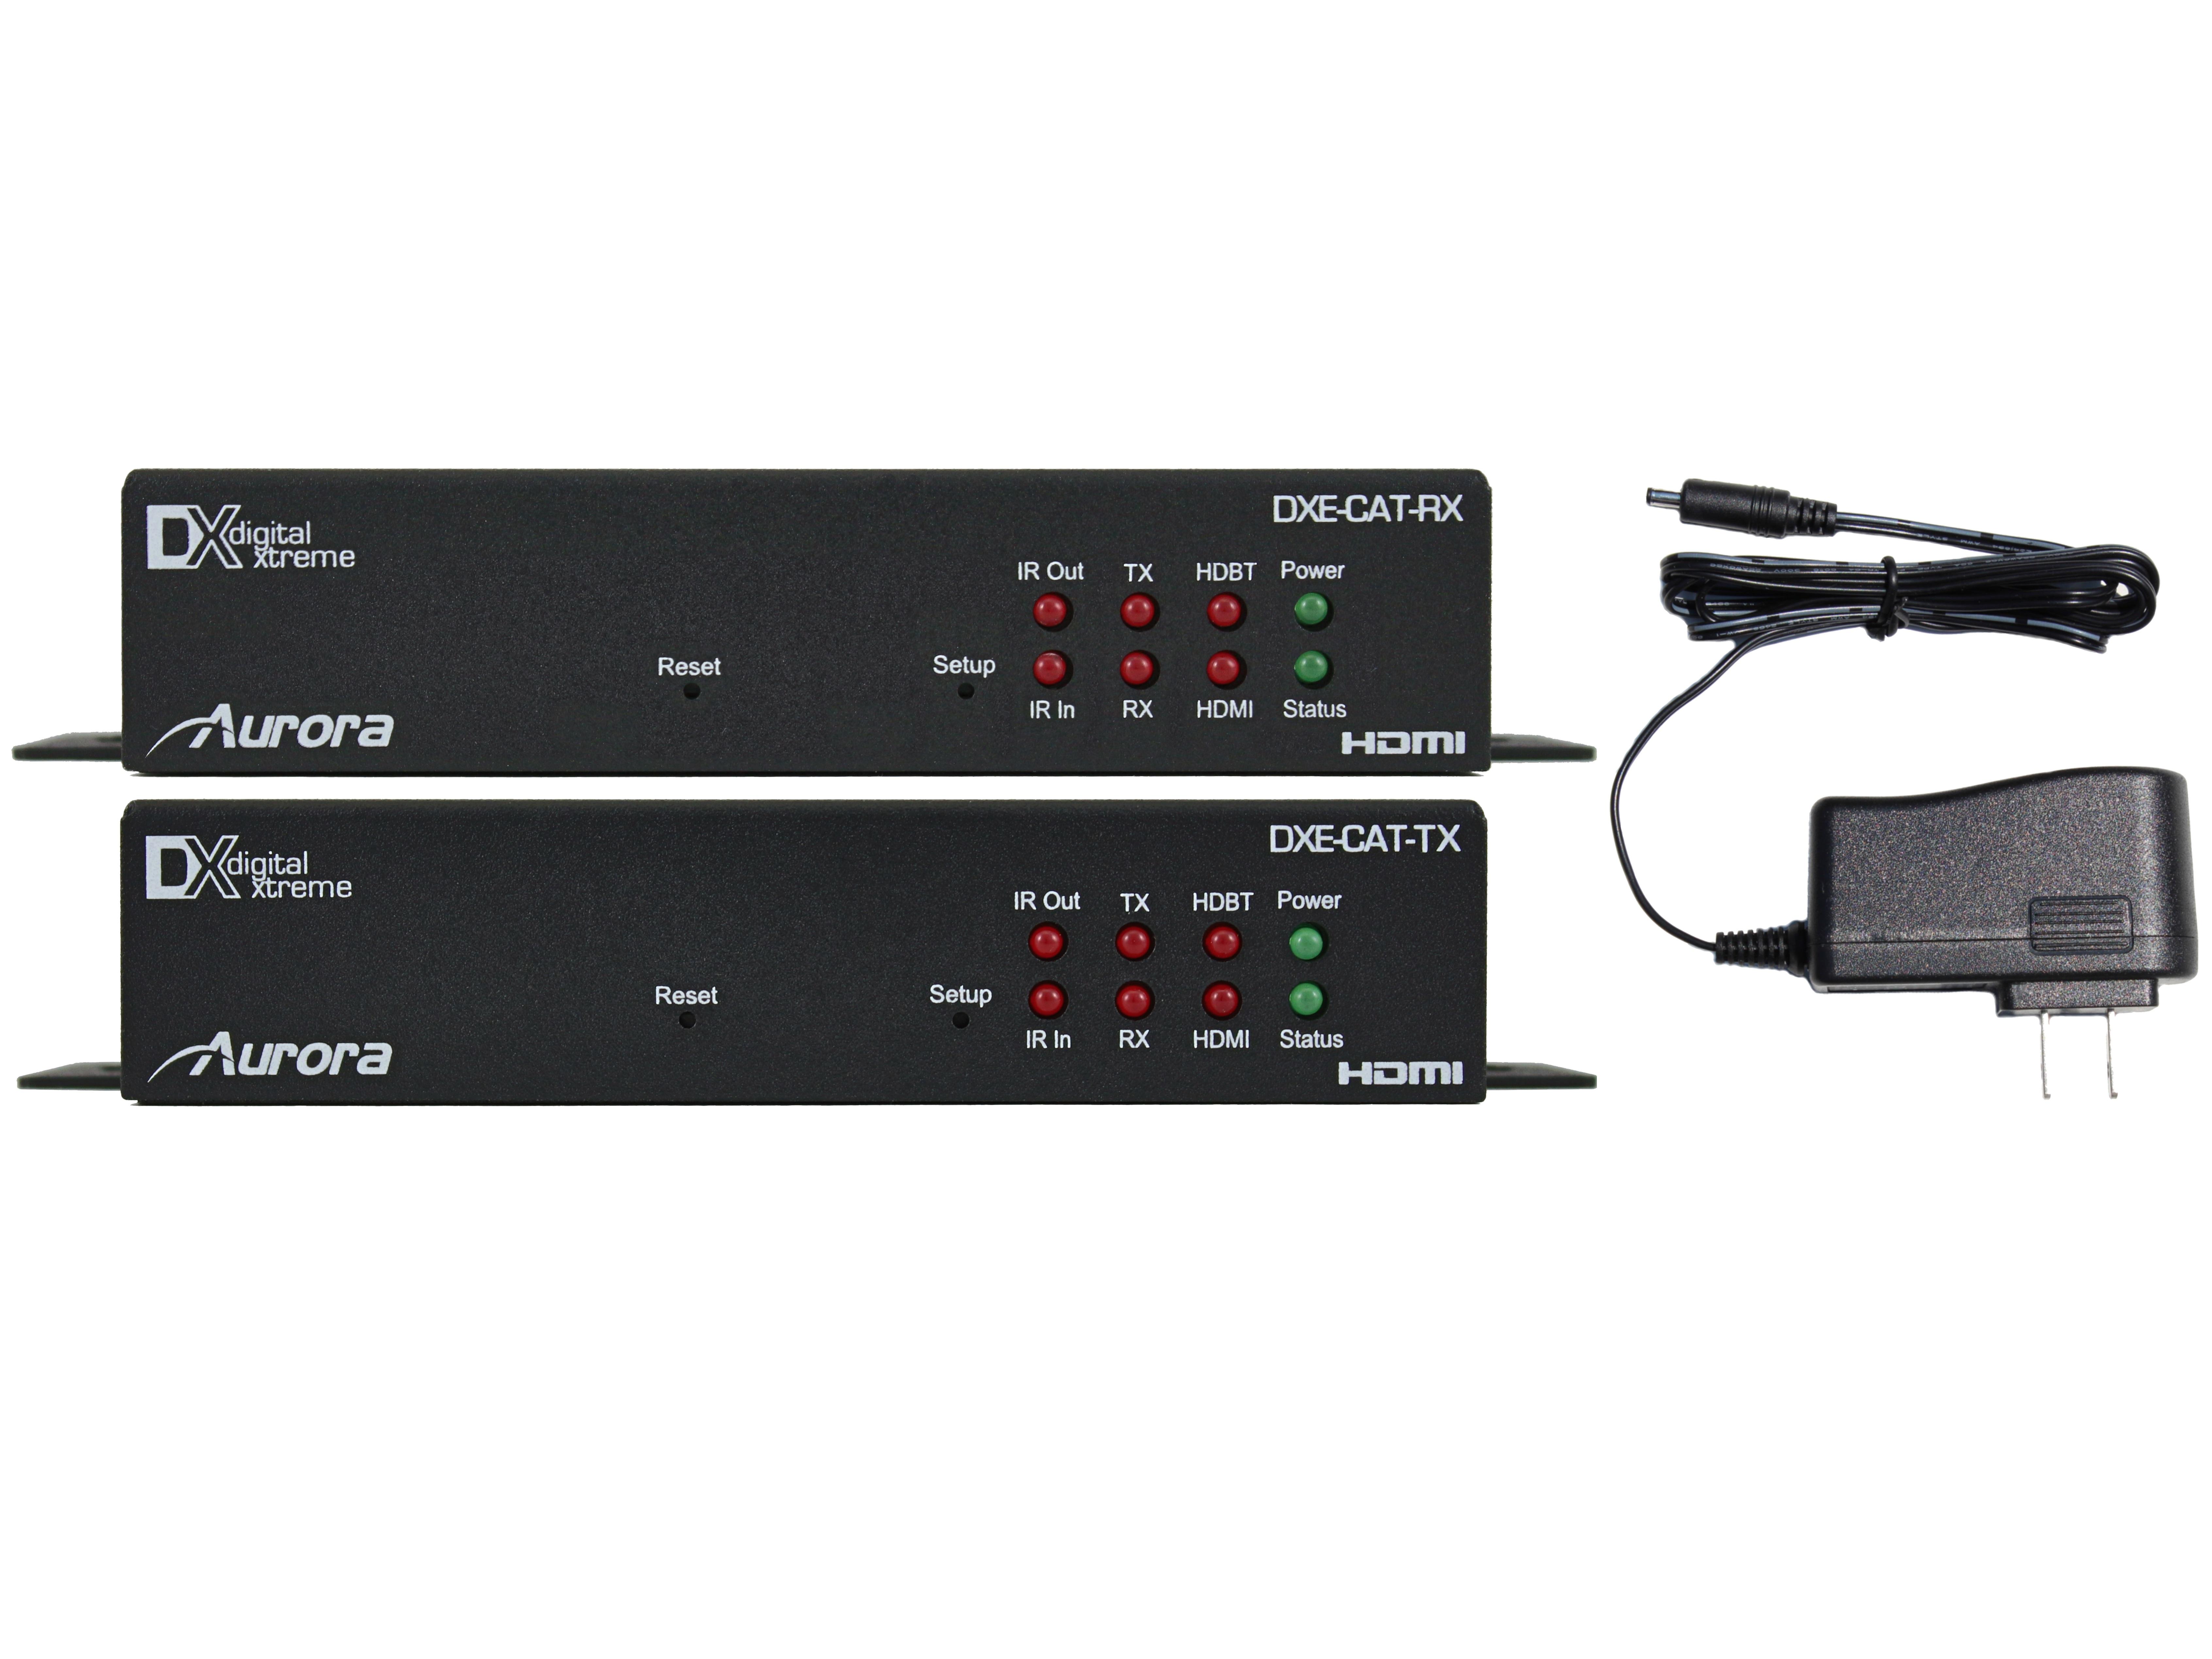 DXE-CAT-S1-4K HDMI HDBaseT CAT Extender (Transmitter/Receiver) 70m/230ft Kit by Aurora Multimedia